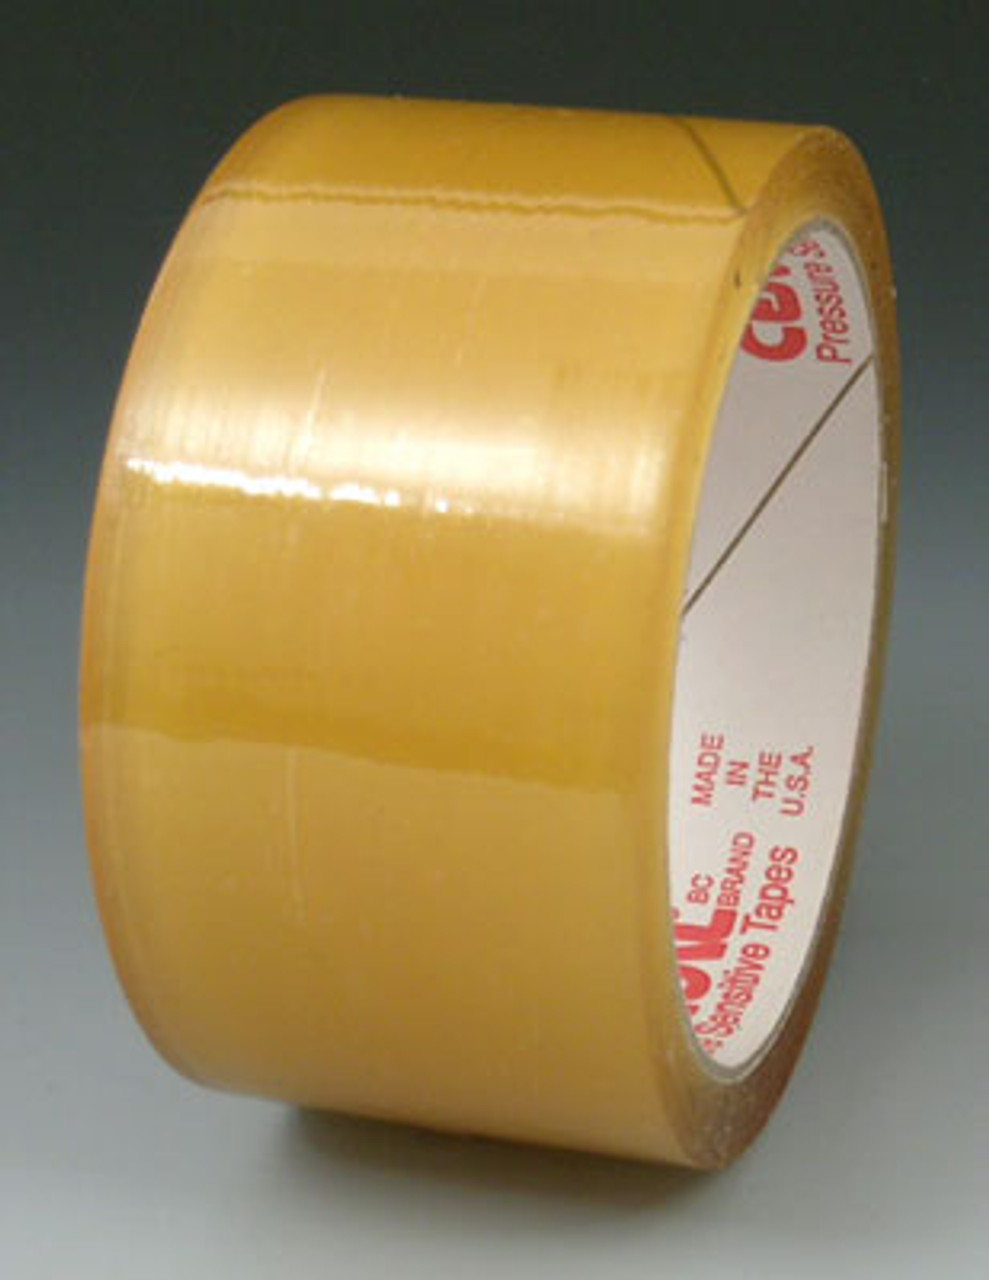 Natural Rubber Adhesive Carton Sealing Tape - Clear (1.6 mil) (Sold per carton)